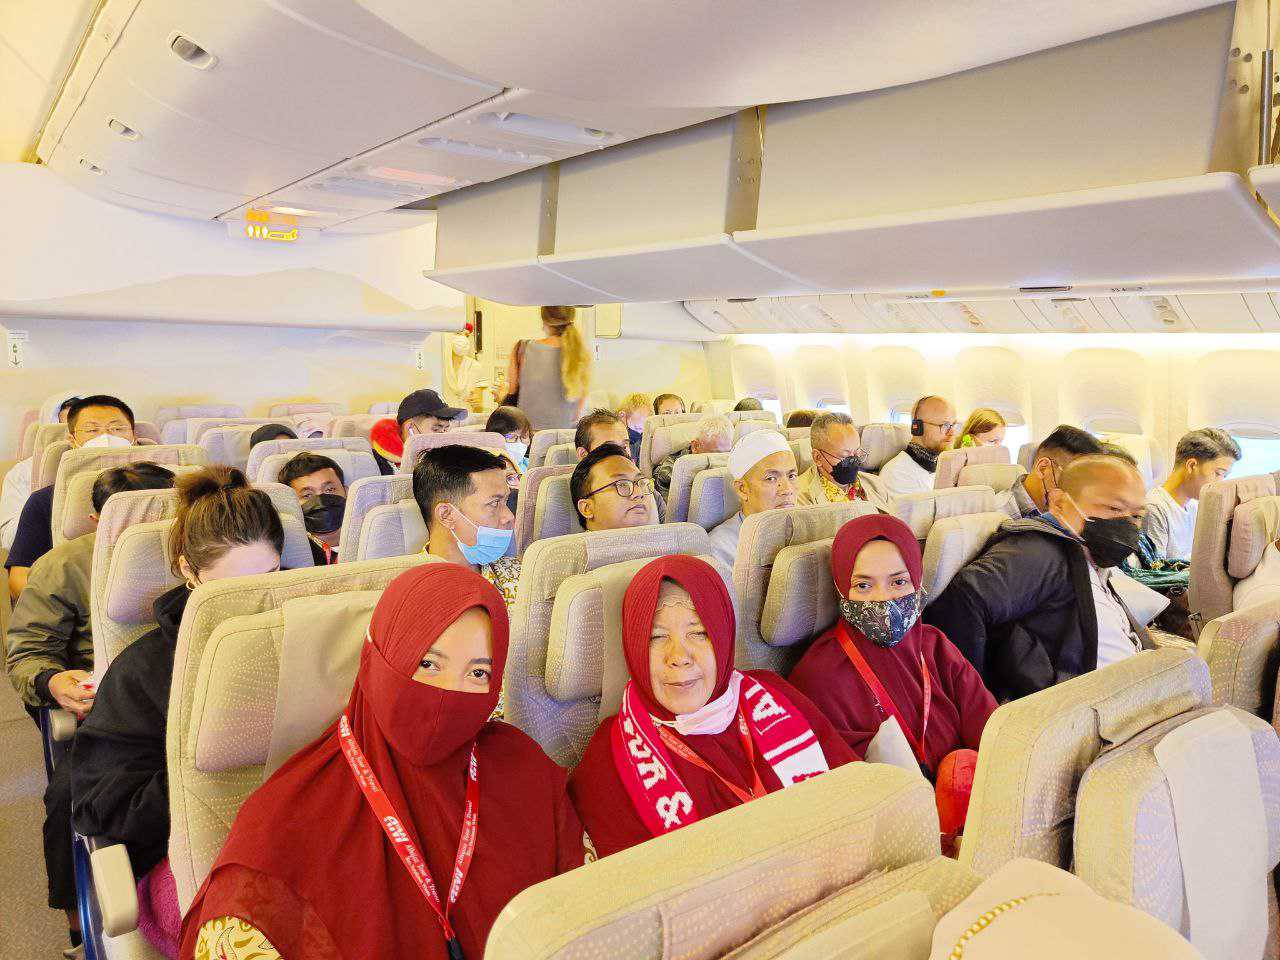 Daftar Umroh Dan Haji Plus Al Hijaz Travel Semarang